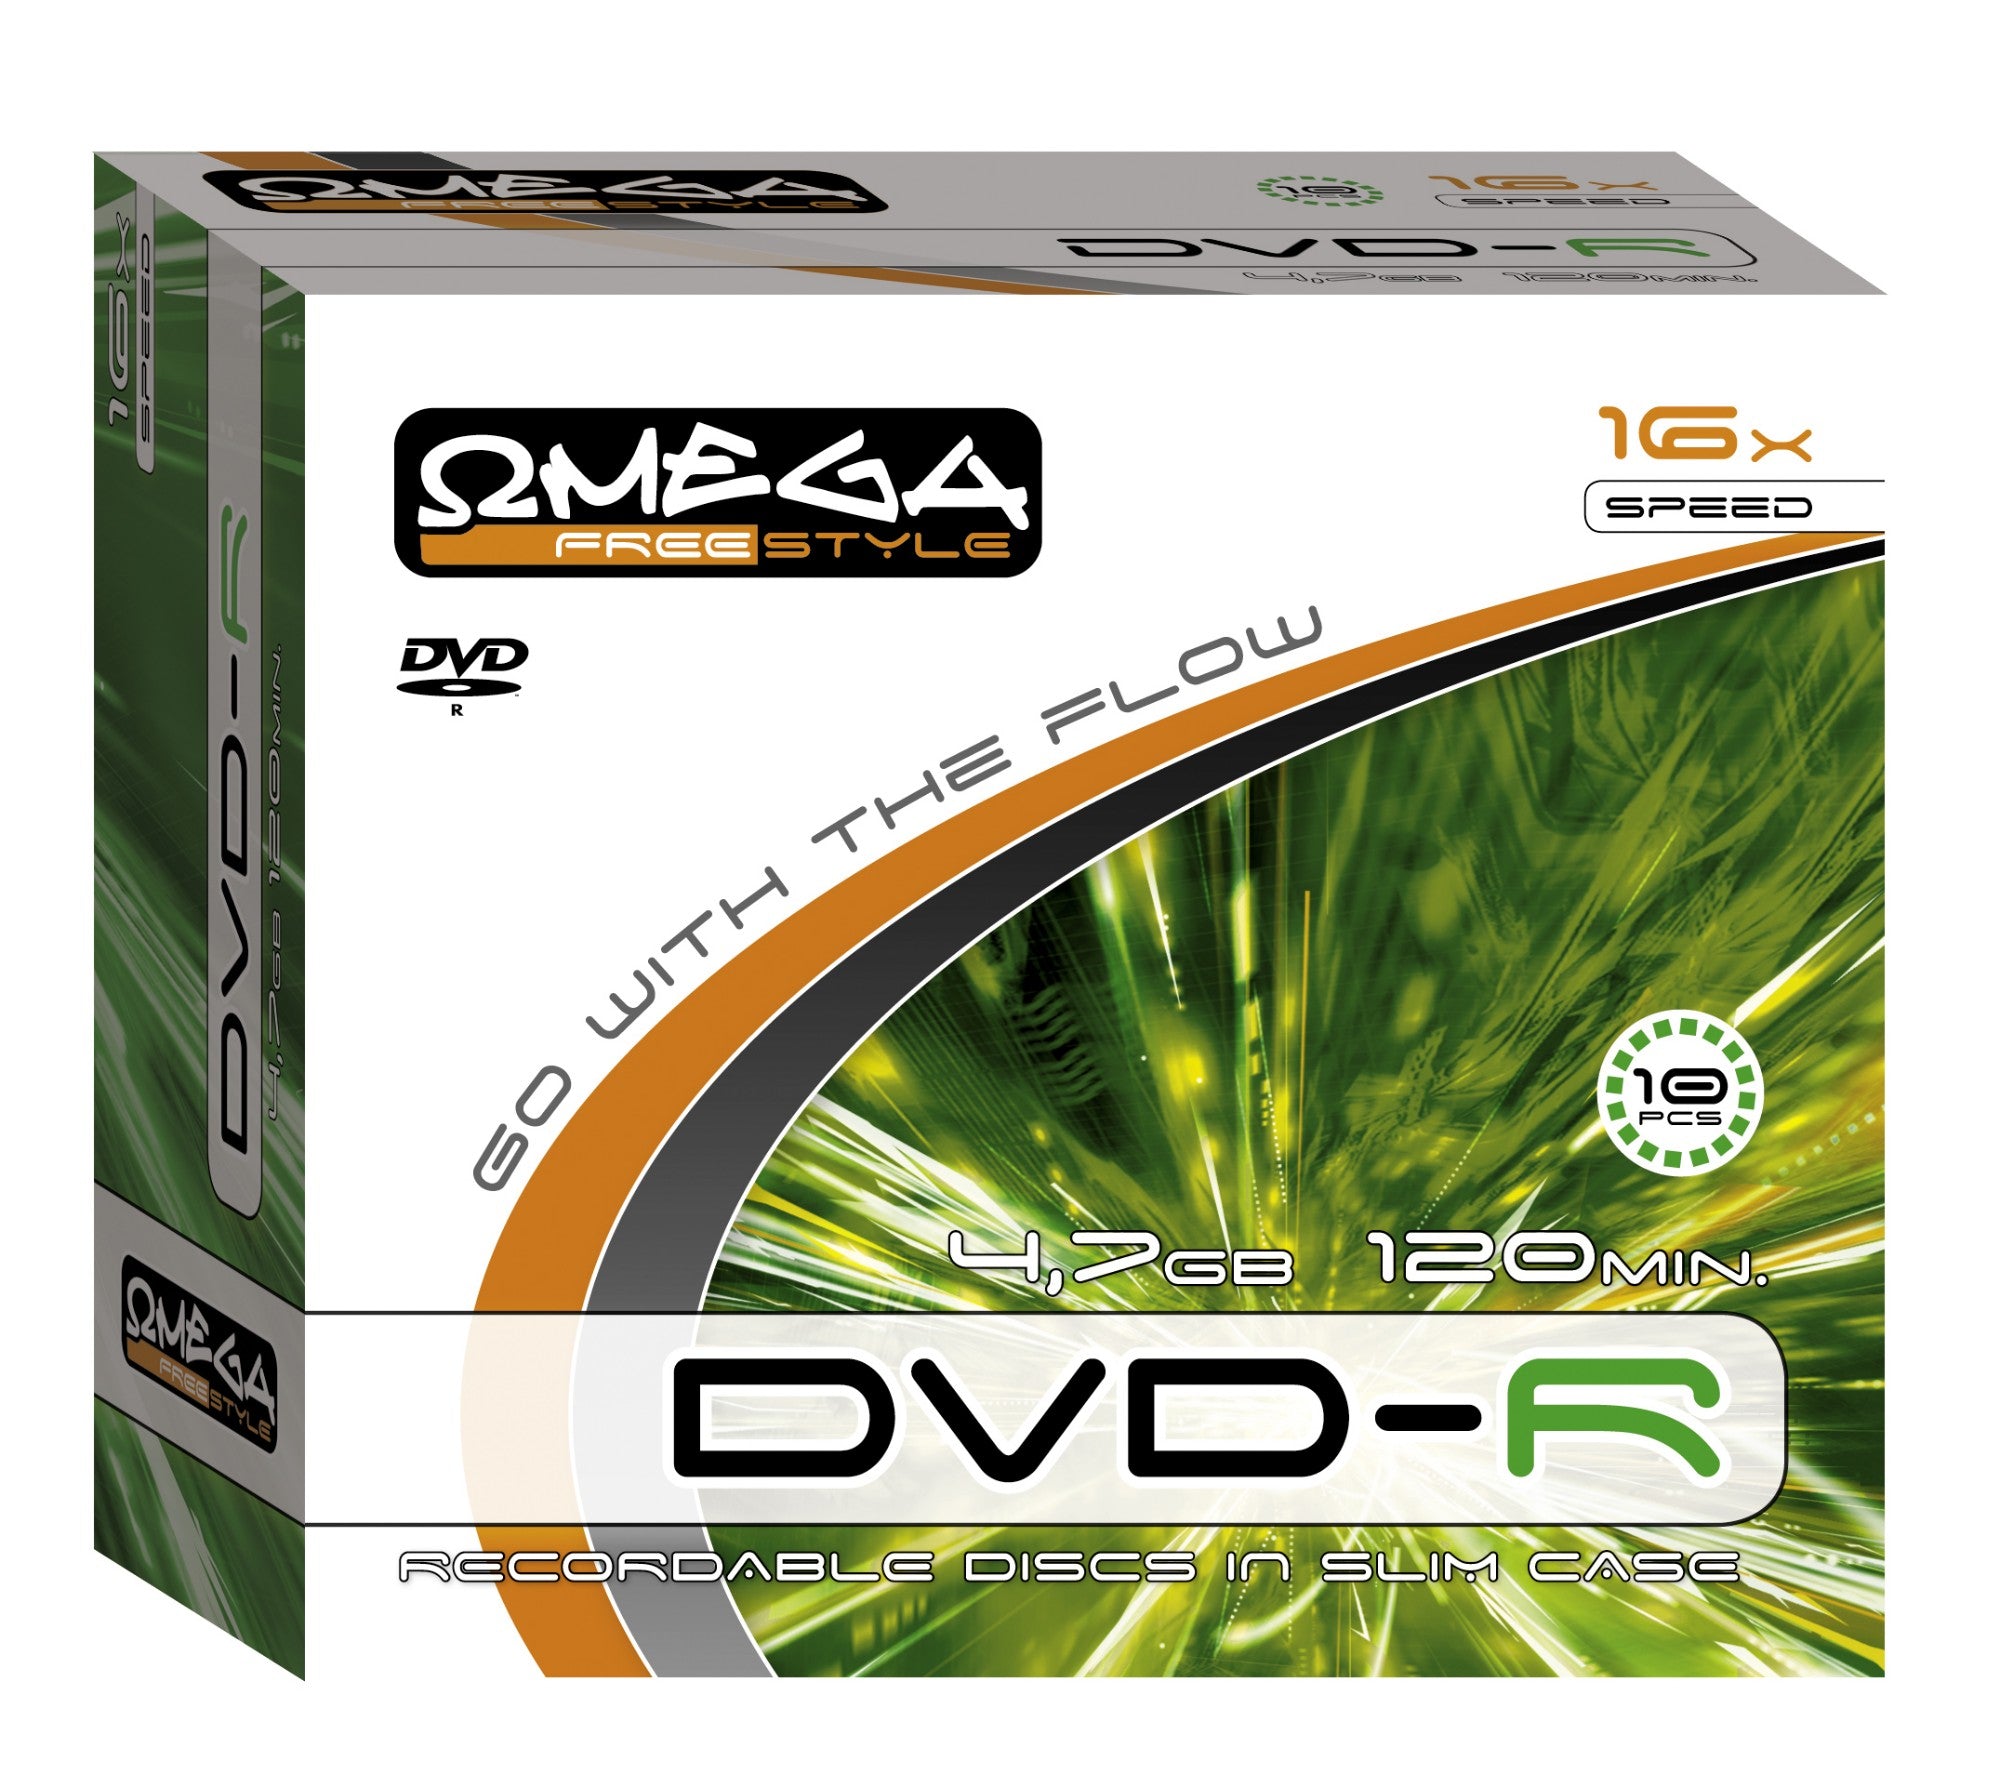 DVD-R (x10 pack)